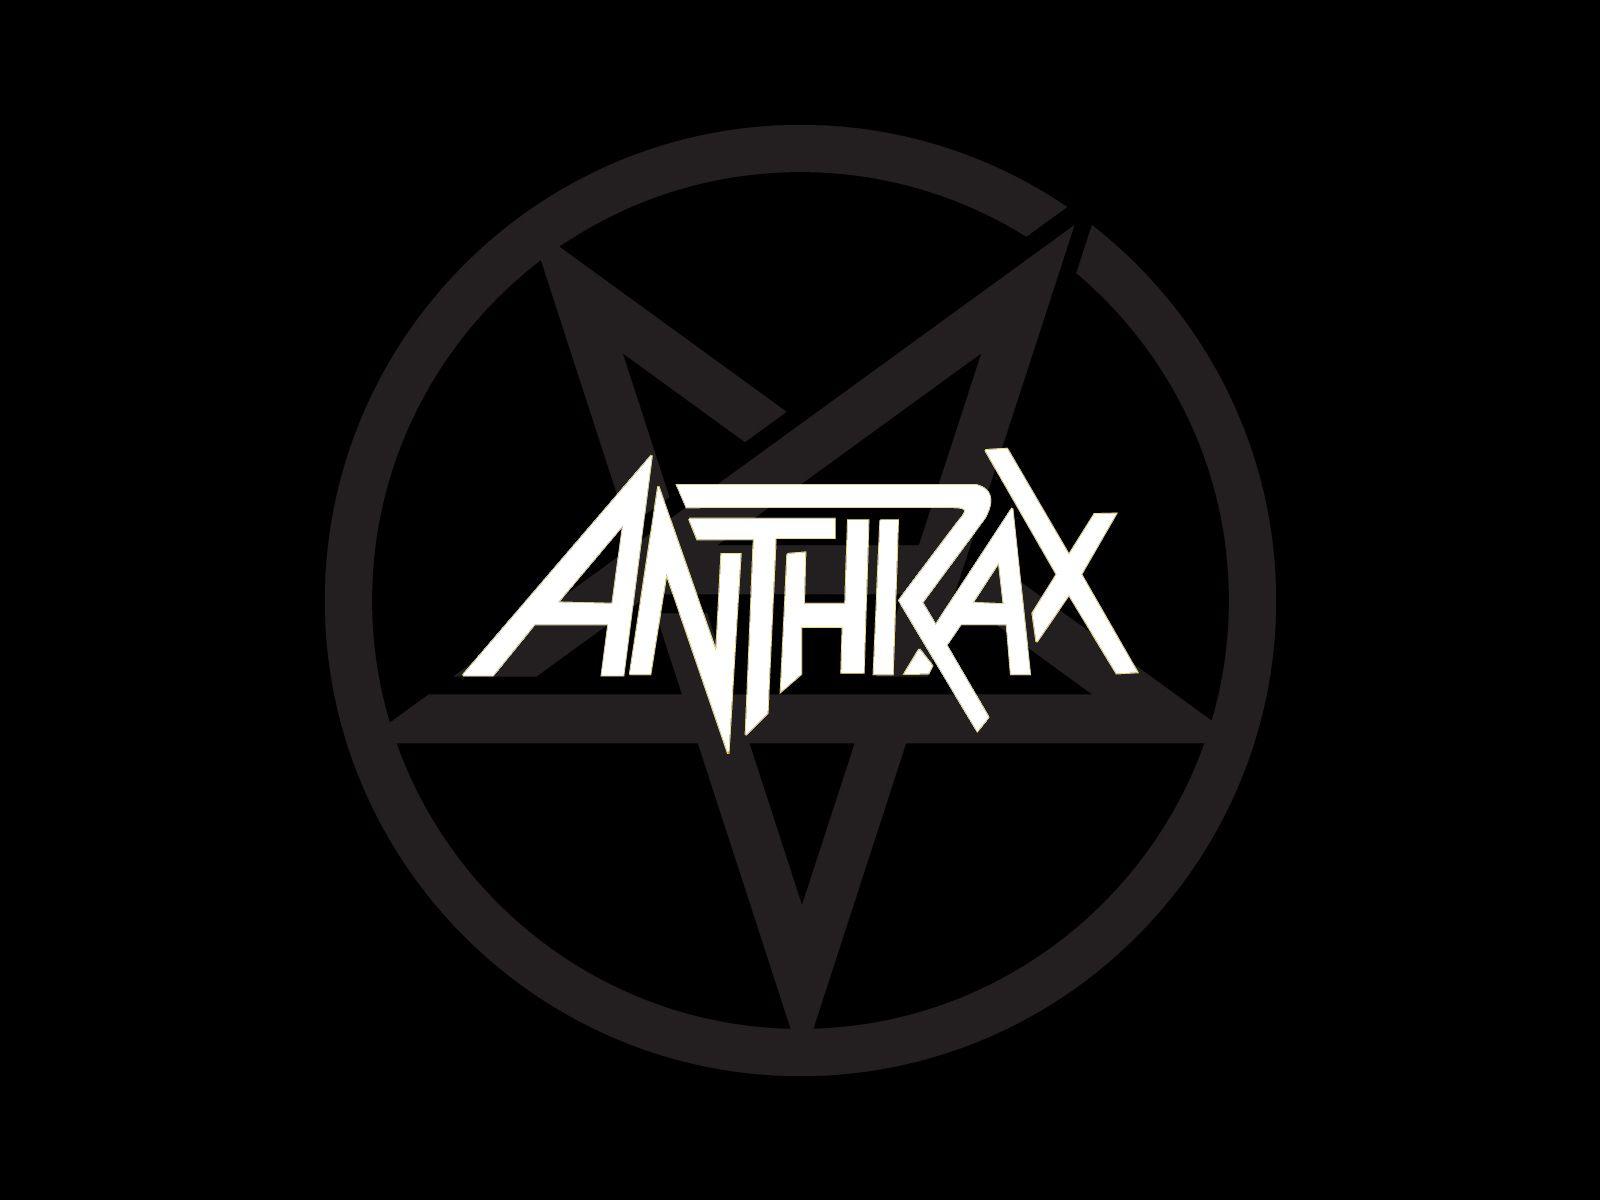 Anthrax wallpaper. Band logos band logos, metal bands logos, punk bands logos